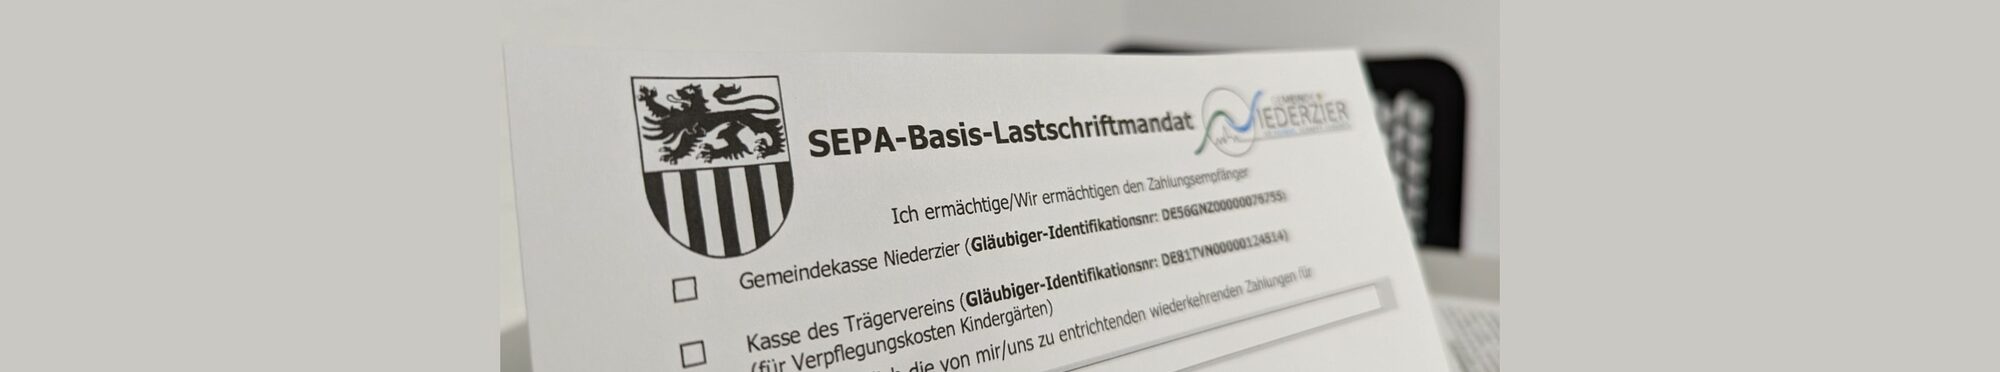 SEPA-Basis-Lastschriftmandat